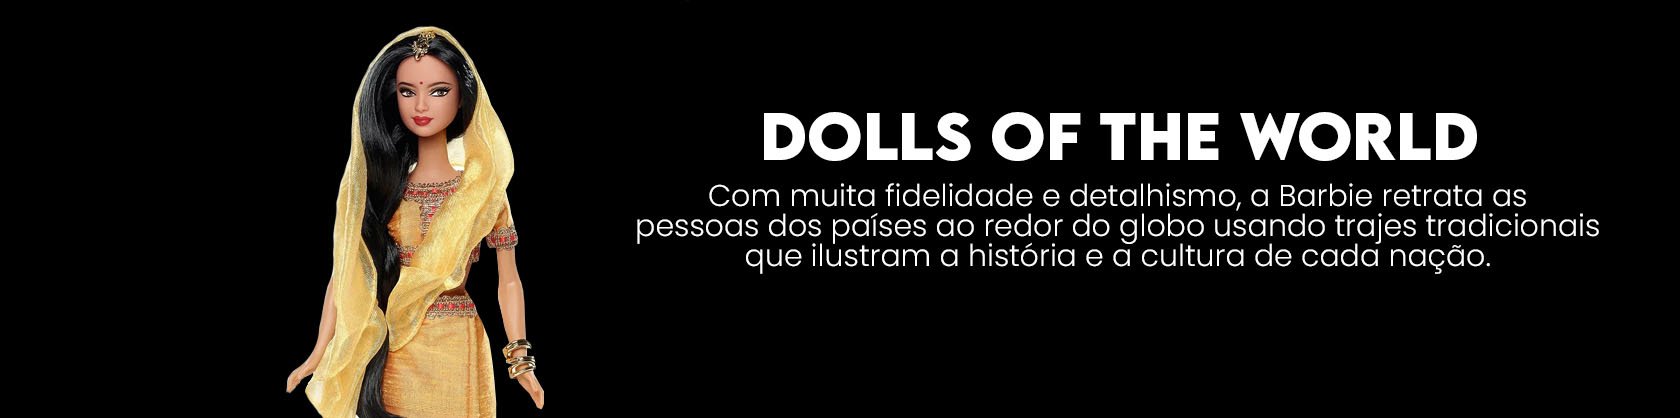 Dolls of The World 